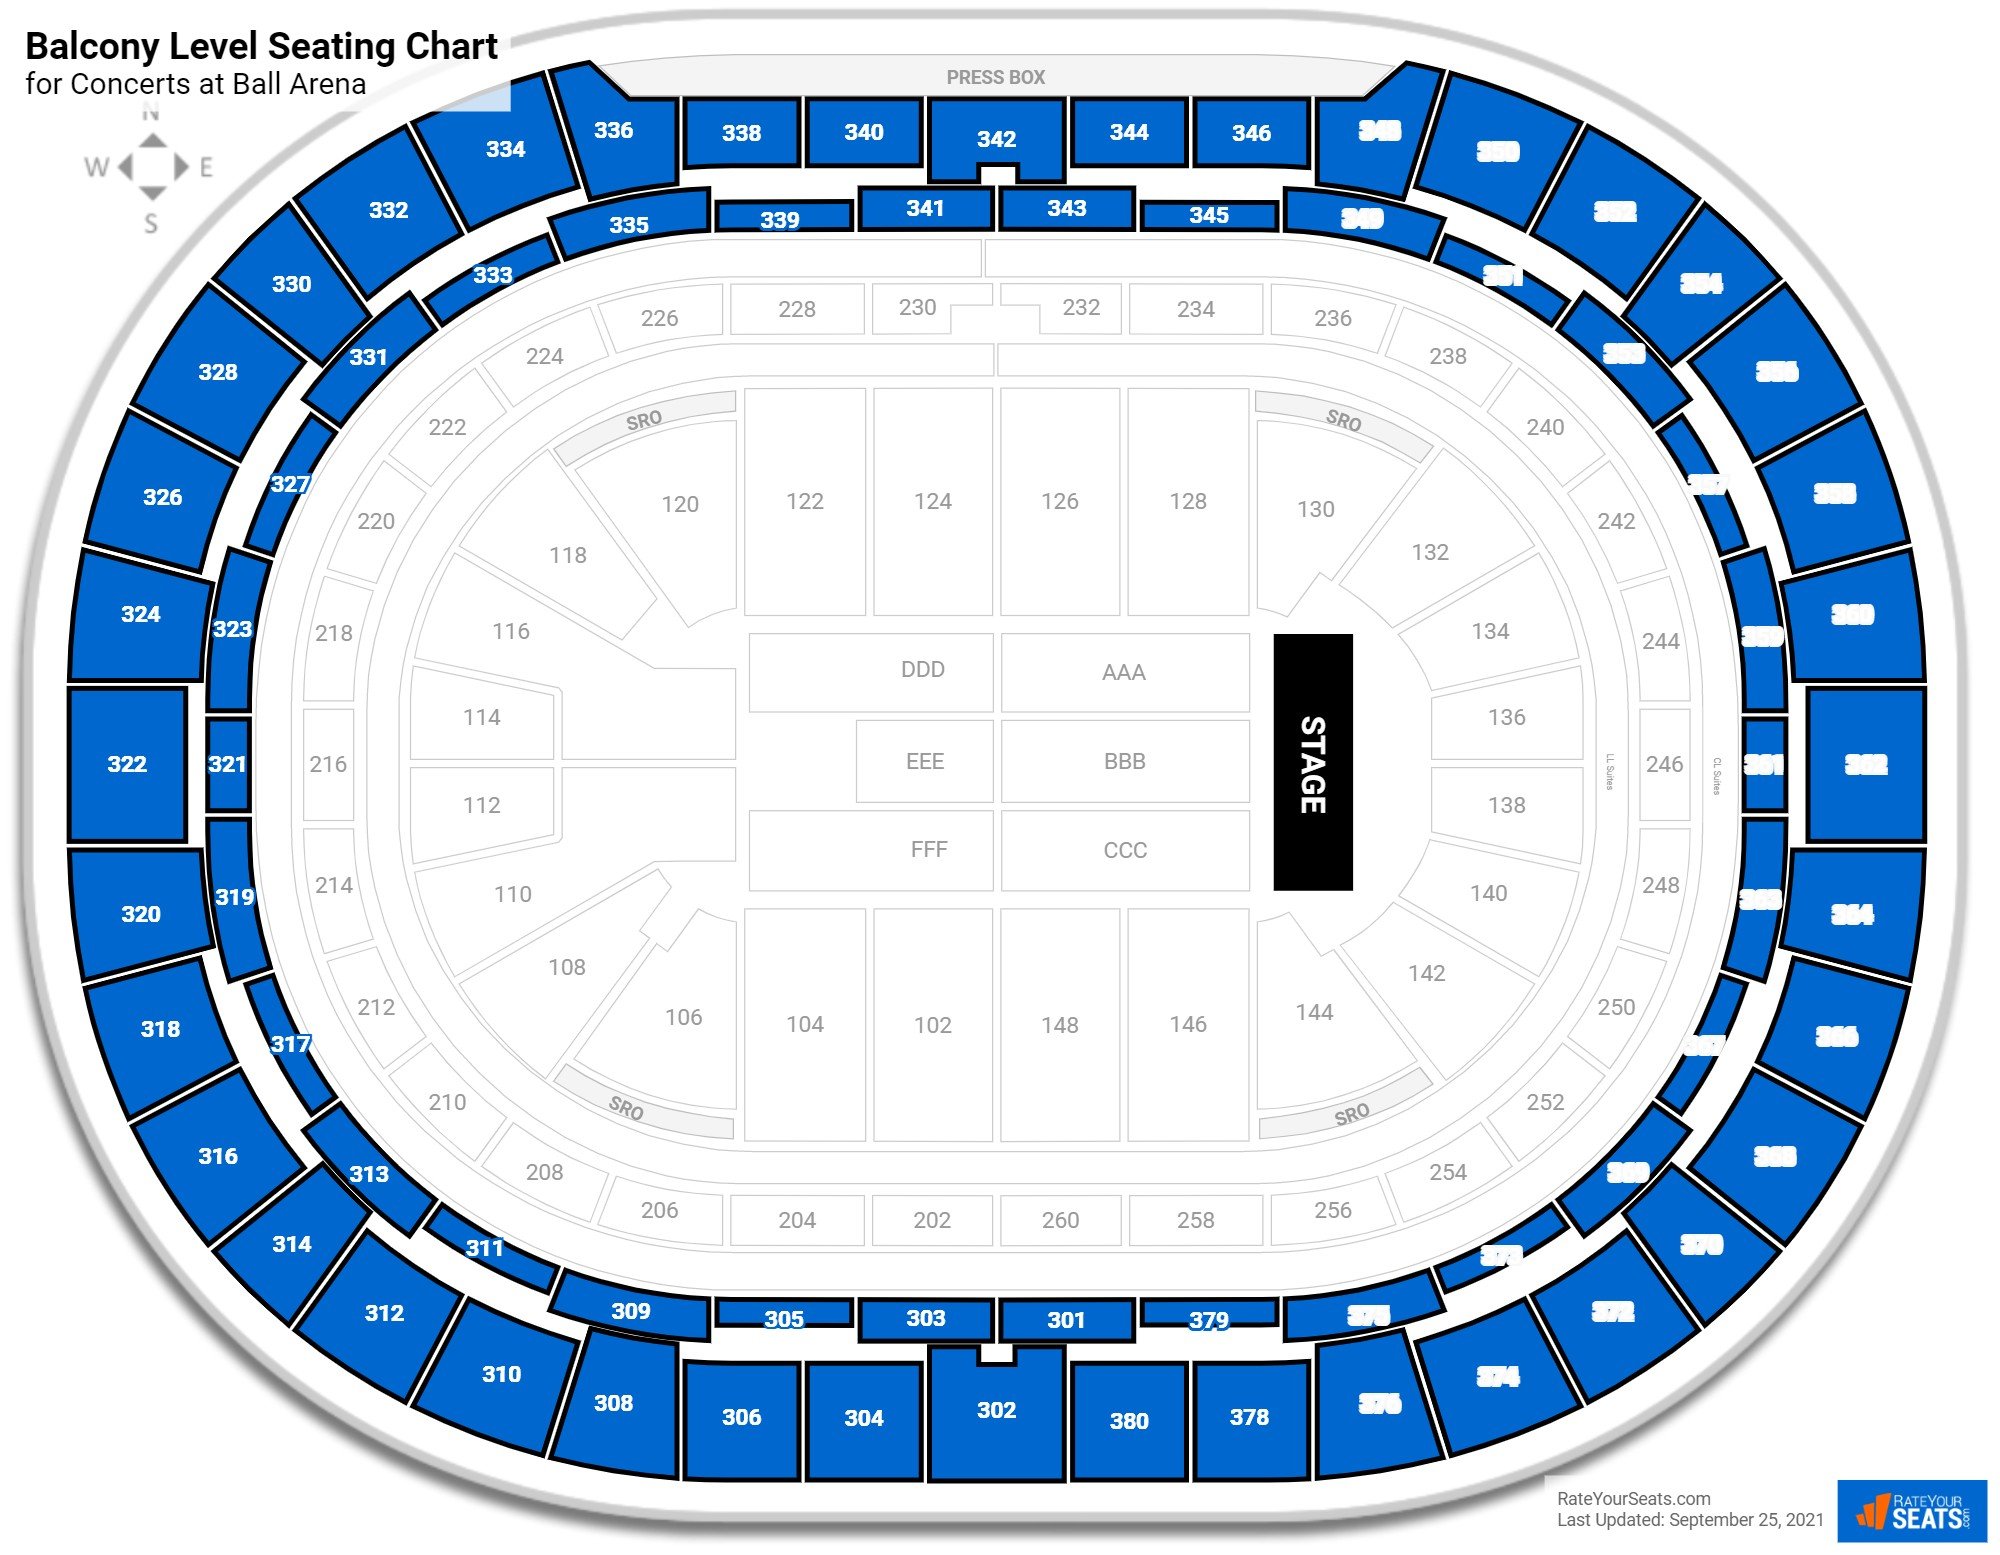 Ball Arena Seating Chart + Rows, Seats and Club Info - santos.cis.ksu.edu